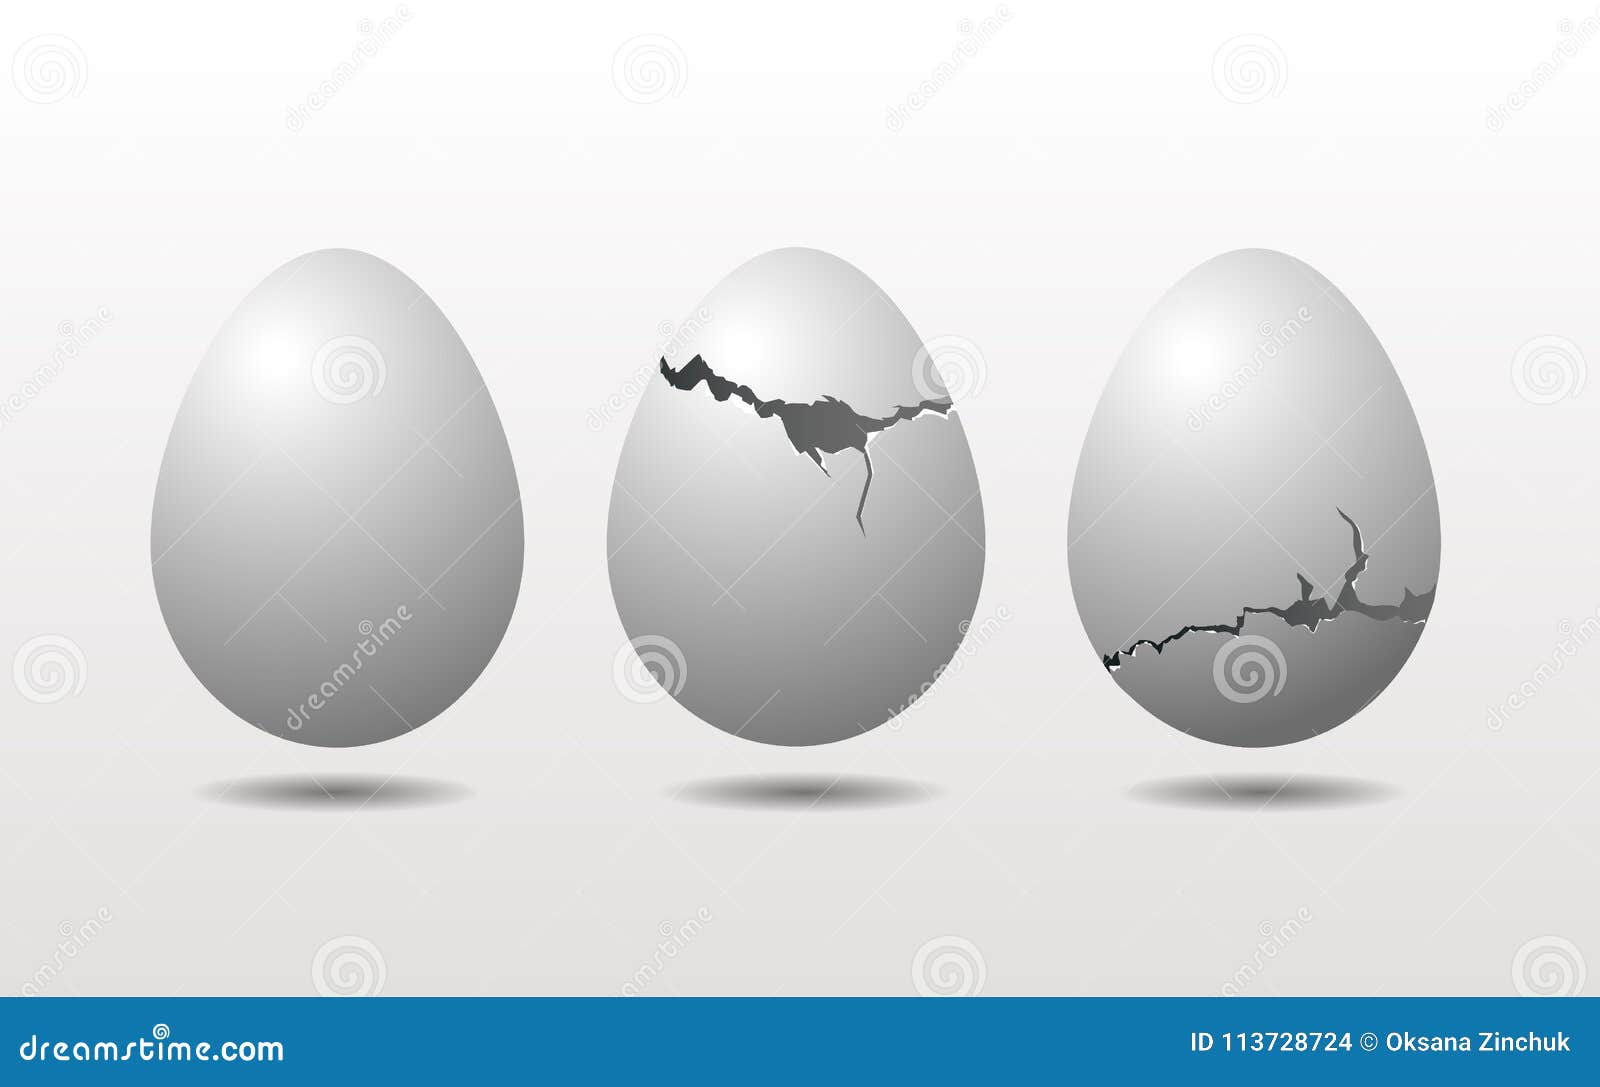 Яйцо трещина. Яйцо с трещиной. Яйцо с трещиной вектор. Белое яйцо с трещиной. Треснутое яйцо вектор.